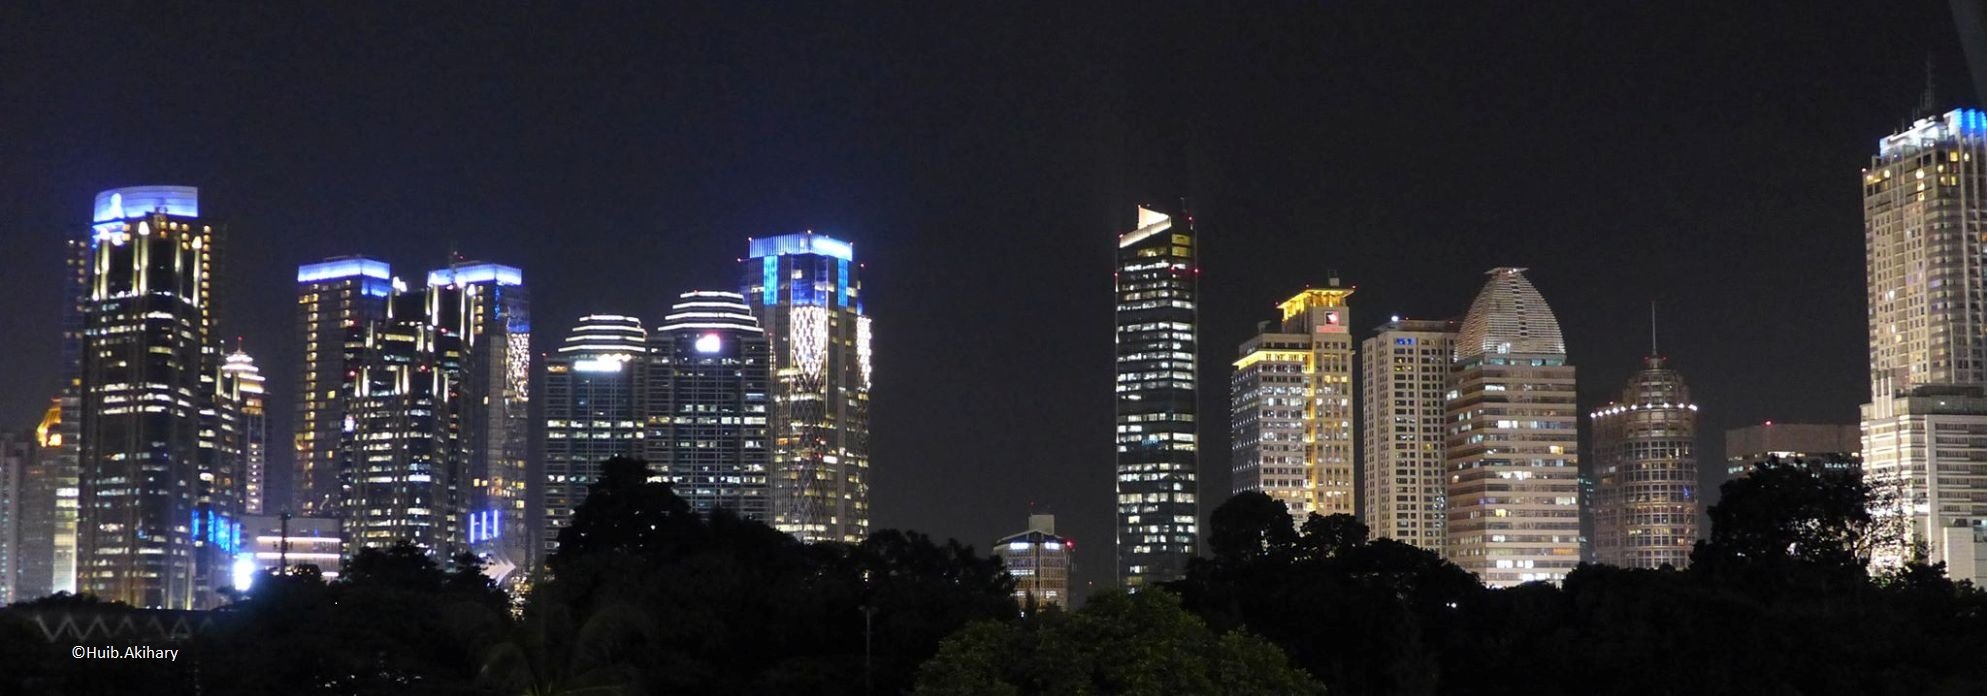 Jakarta by night